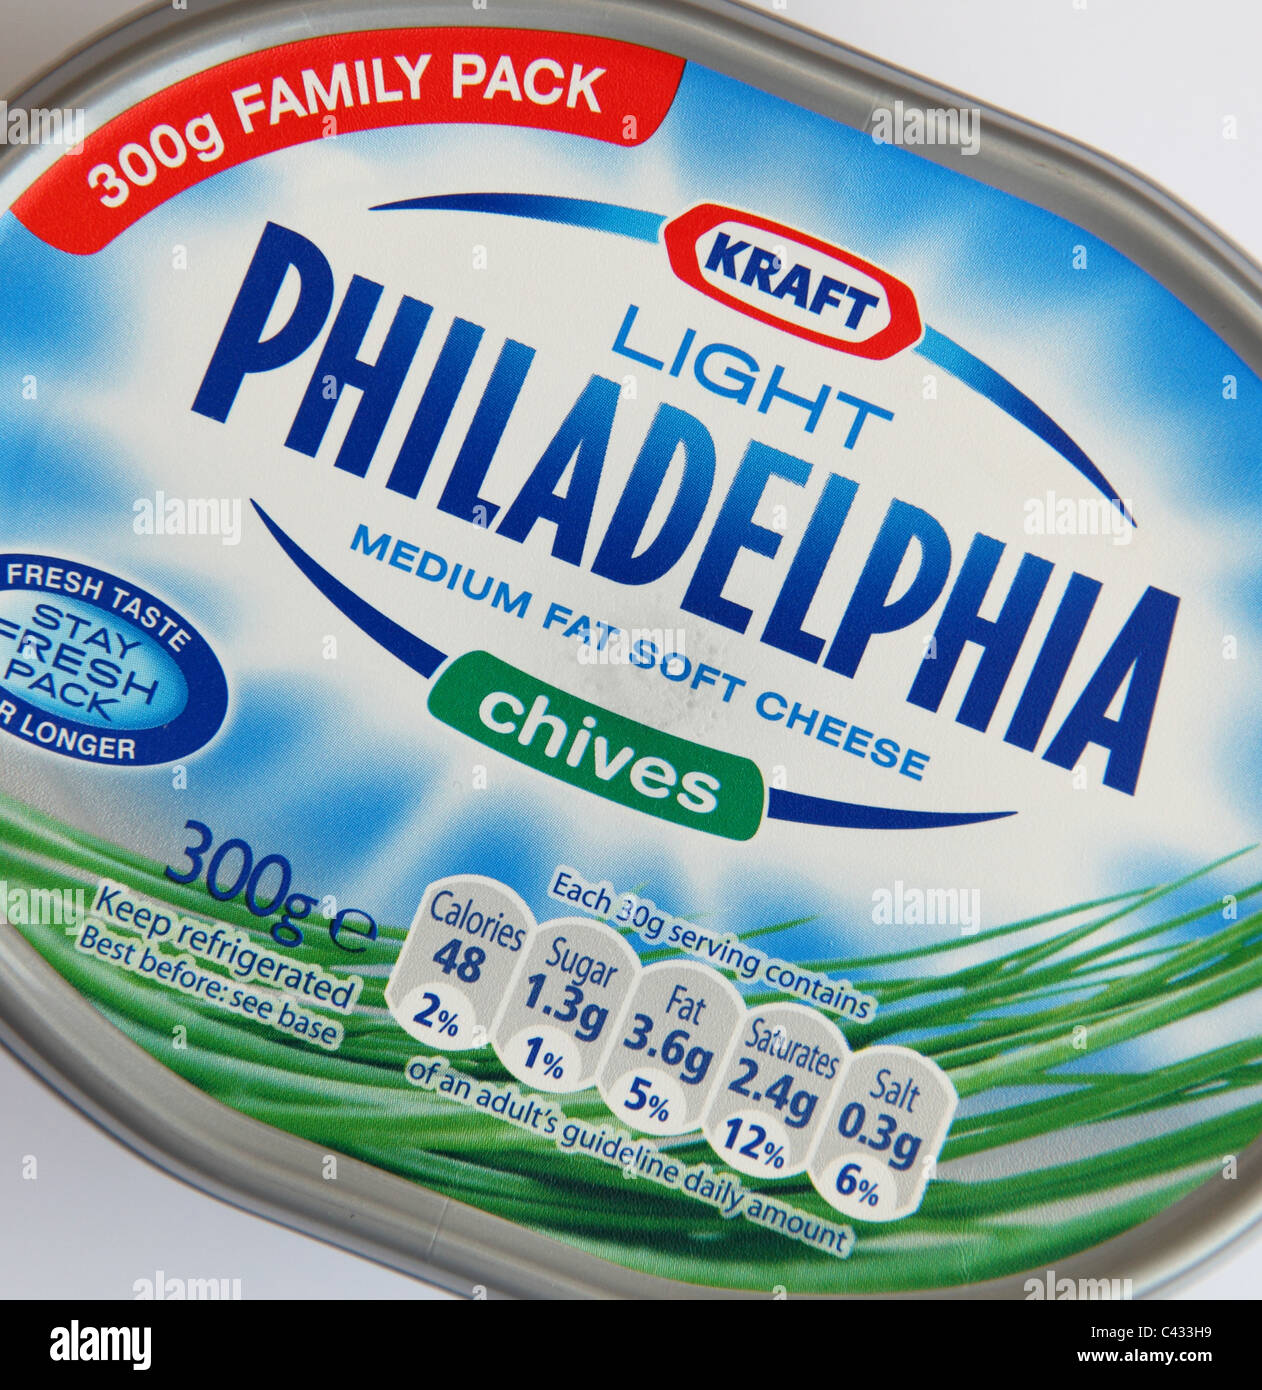 Kraft Philadelphia soft cheese. Stock Photo